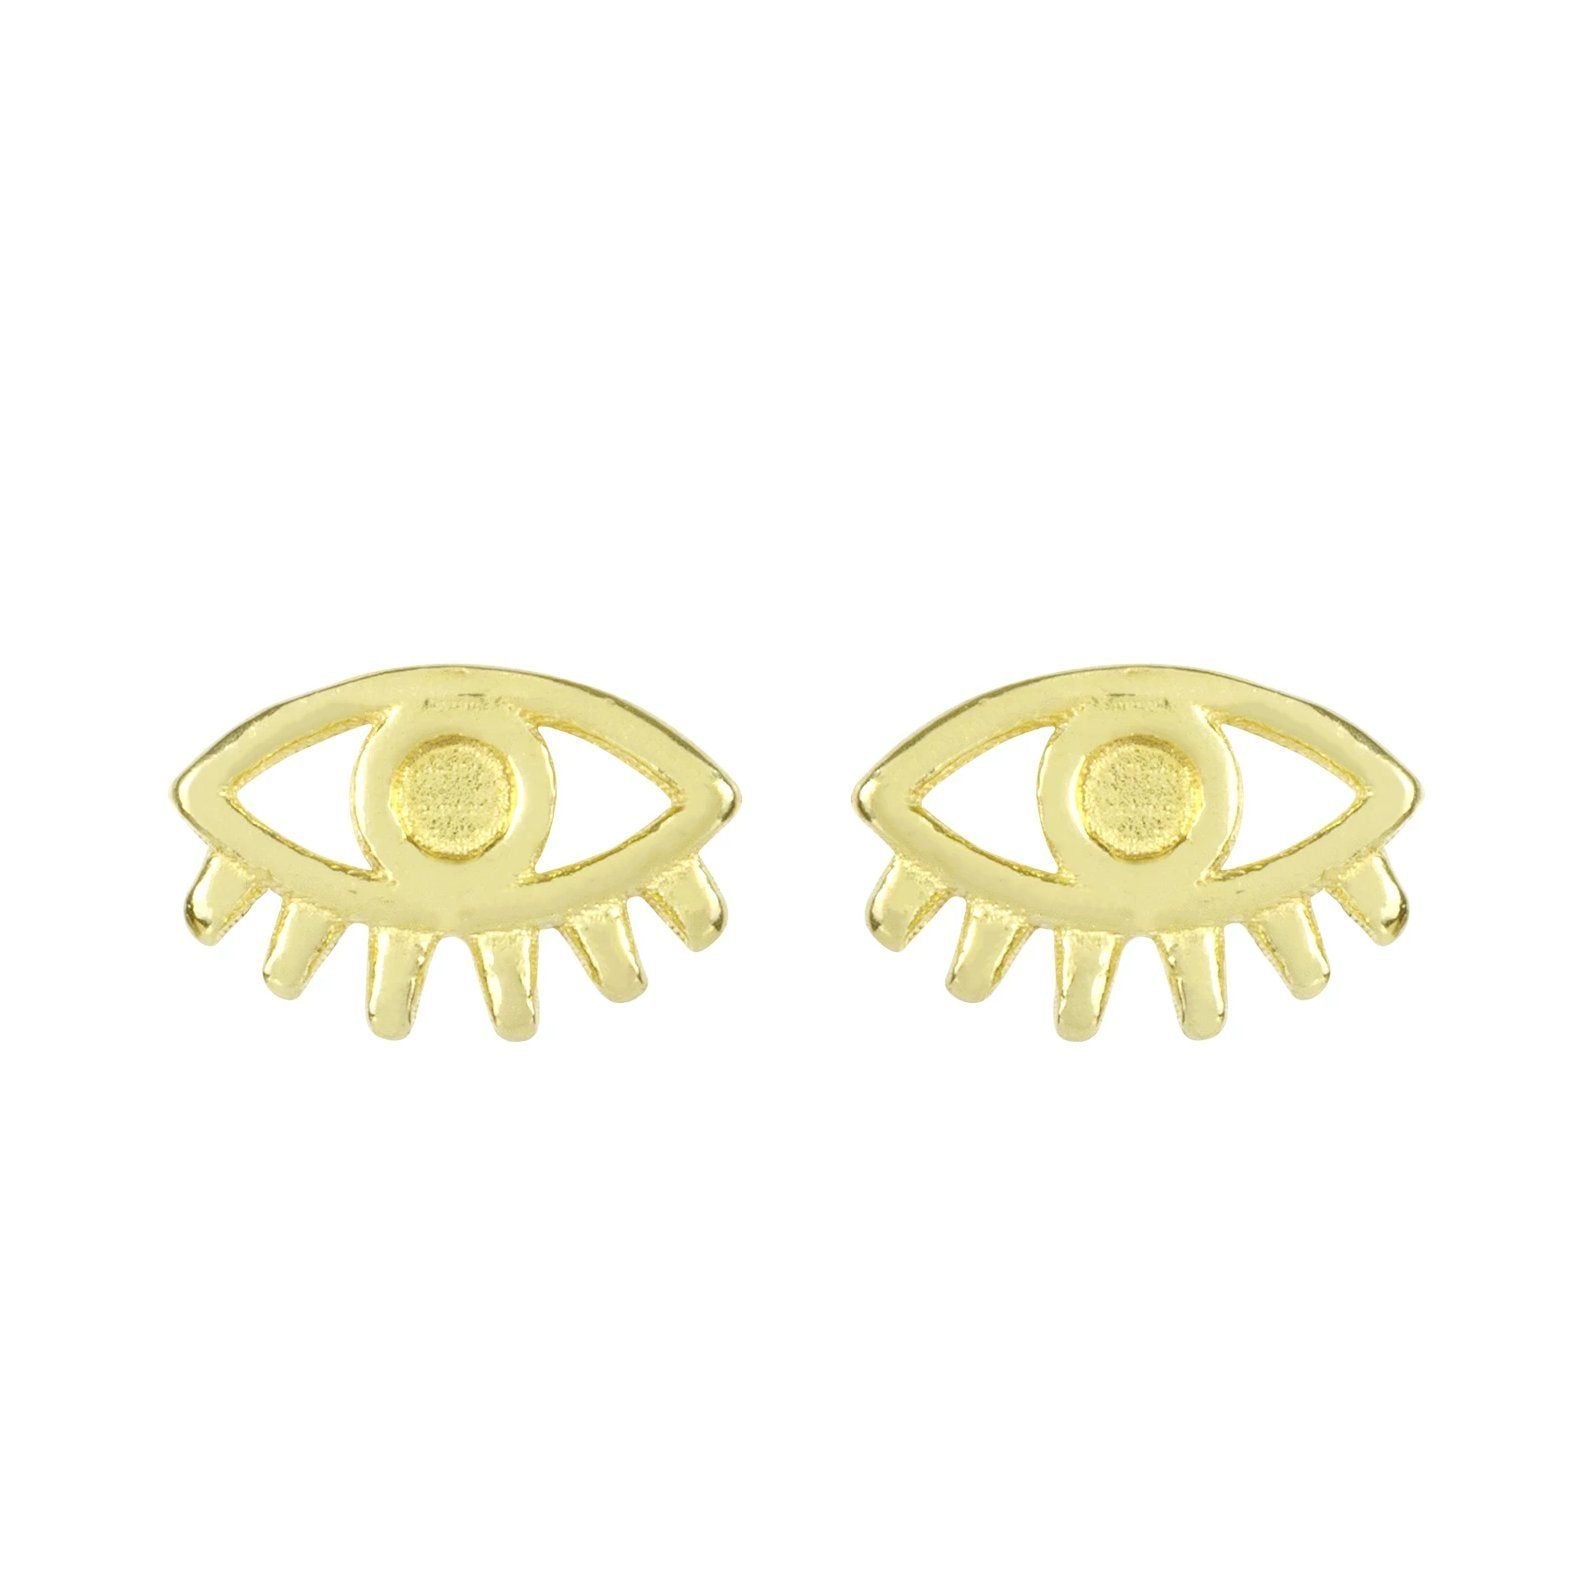 Tiny Evil Eye Stud Earrings Evil Eye Studs Tiny Gold Studs Gold Earrings  Tiny Gold Earrings Gold Eye Earrings dainty Eye Earrings - Etsy